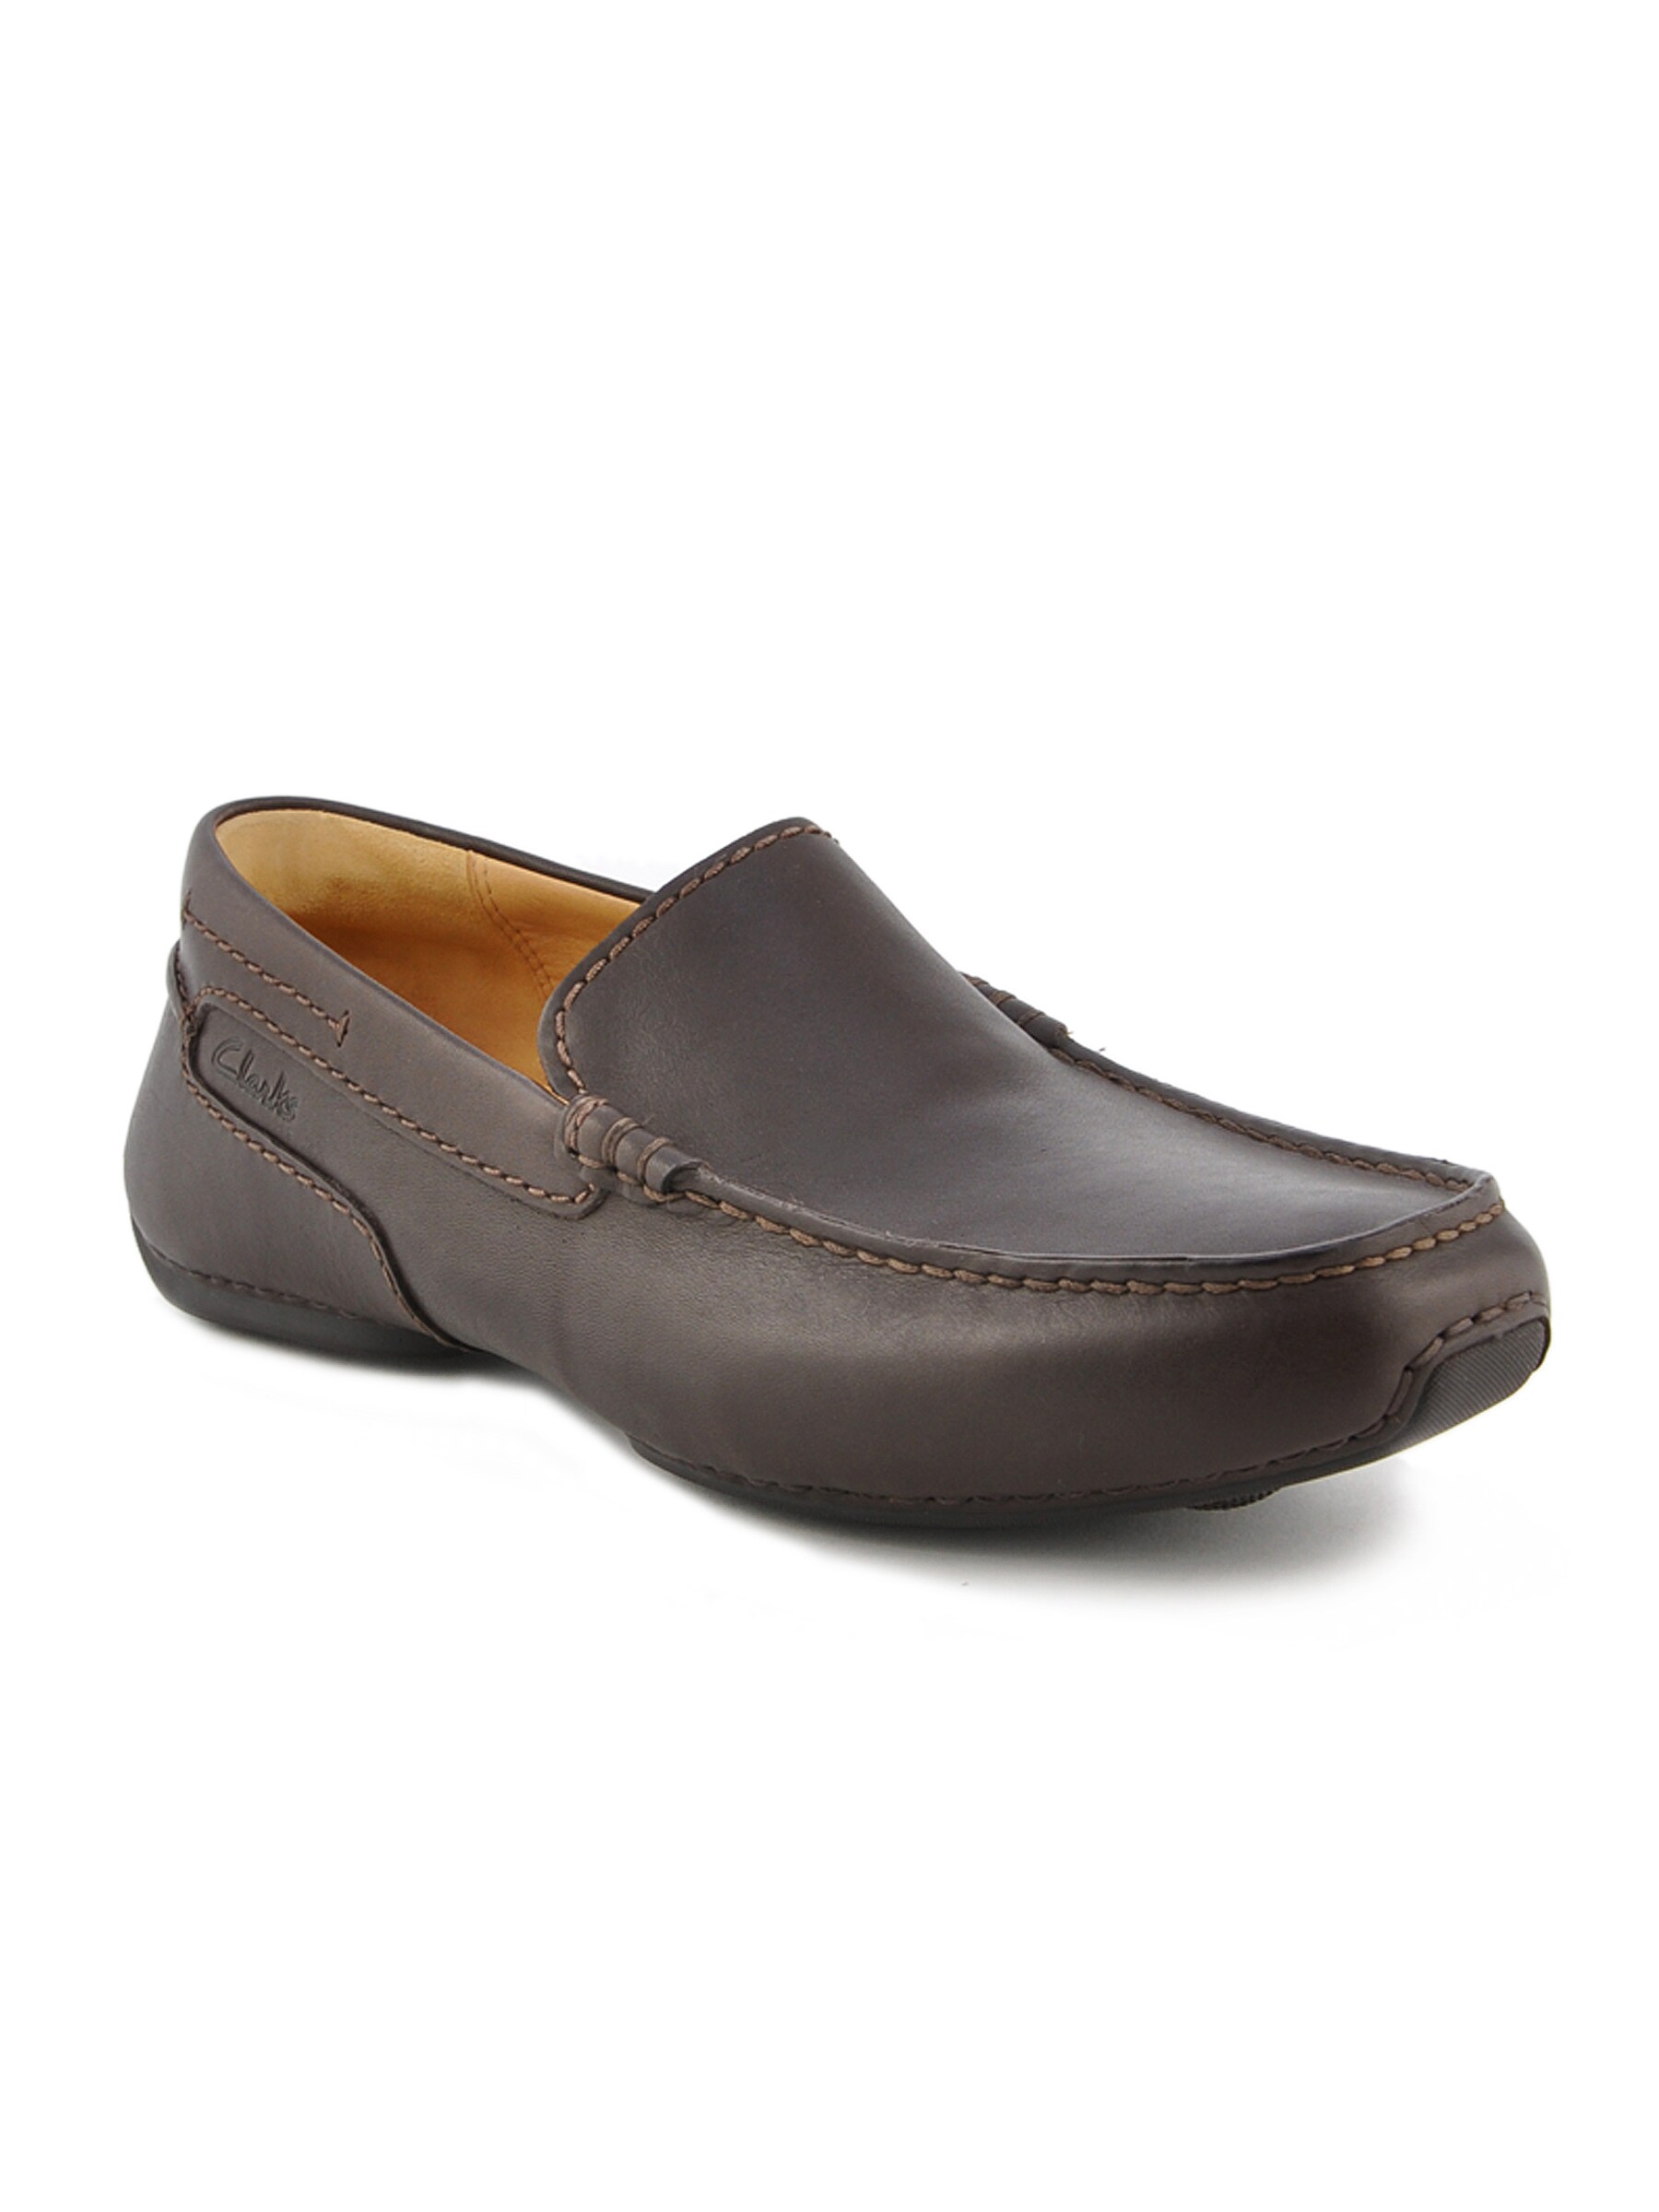 Clarks Men Leather Brown Formal Shoes